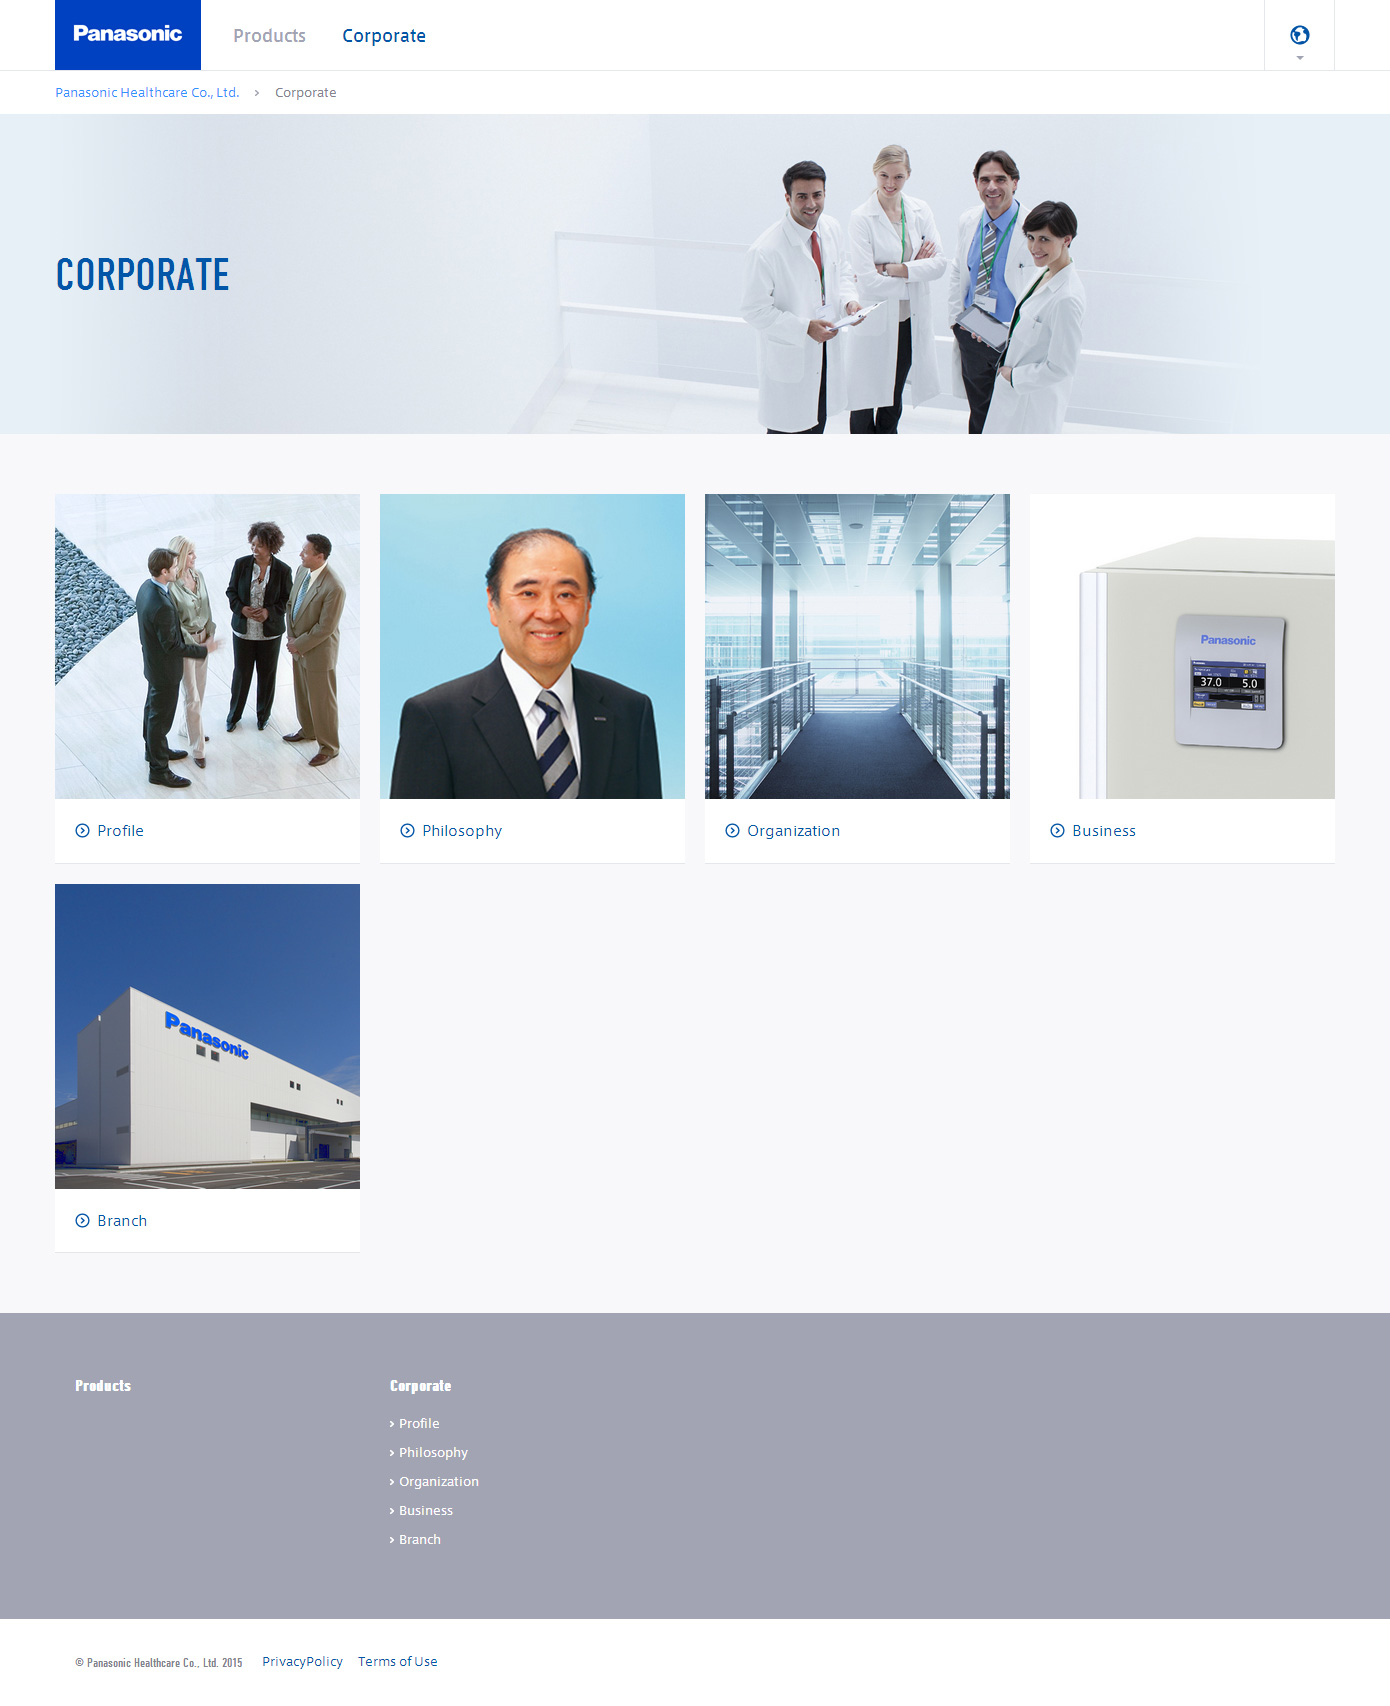 Corporate---Panasonic-Healthcare-Co